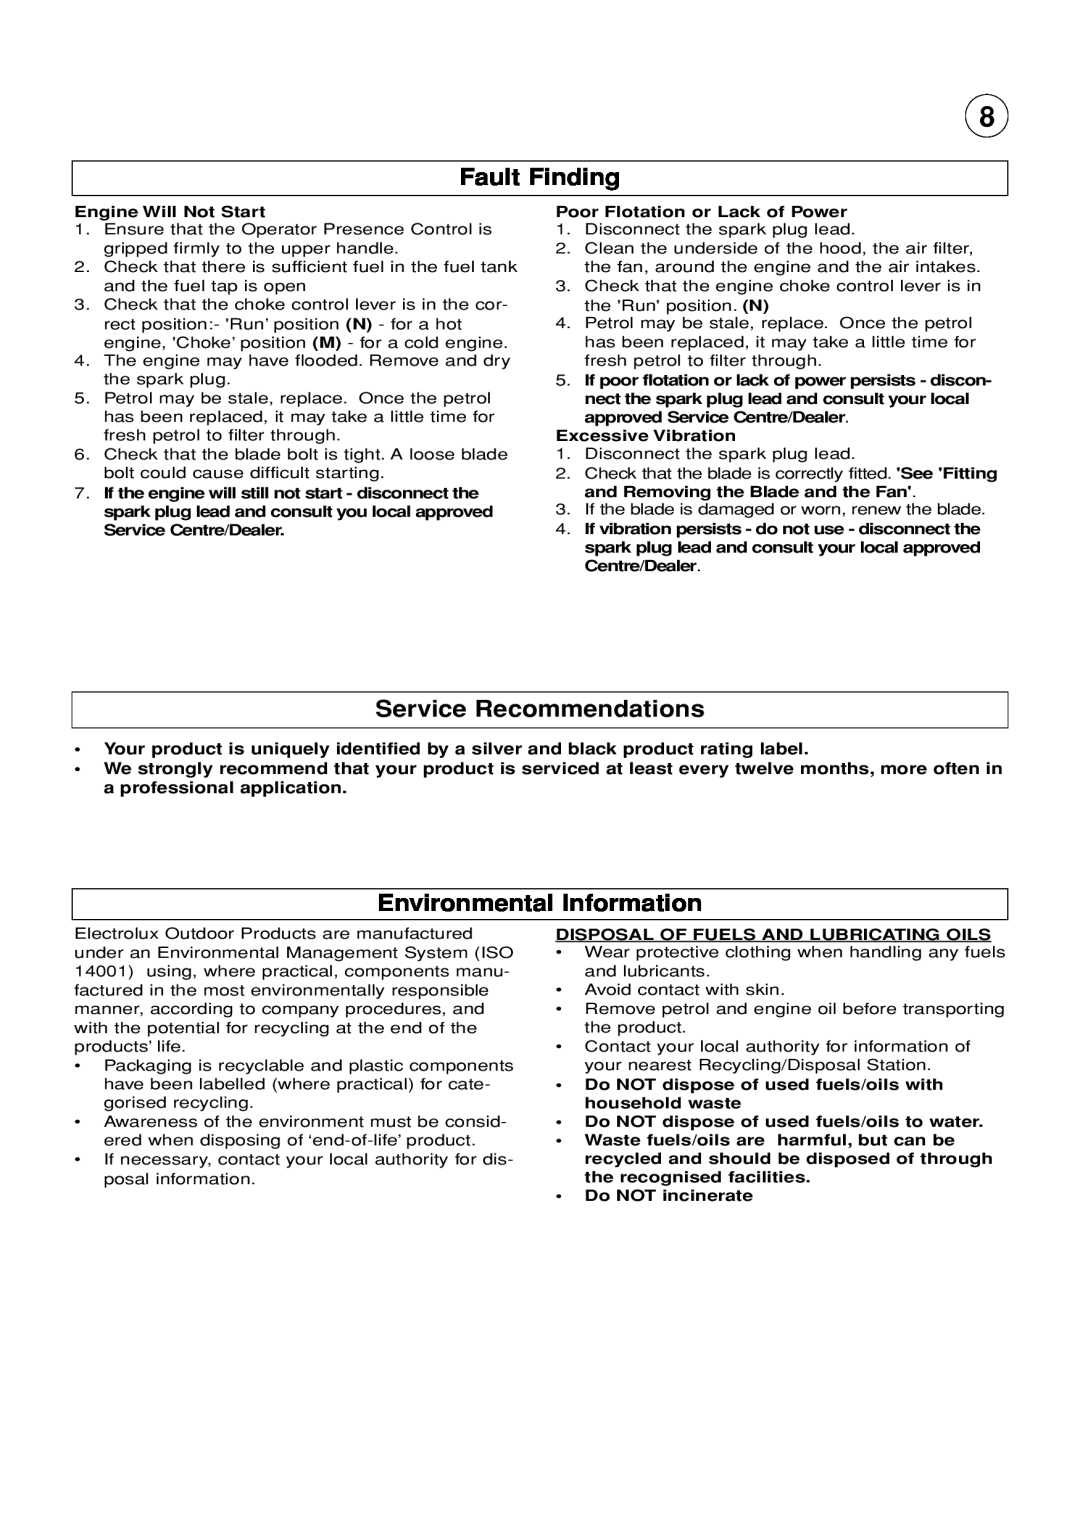 Husqvarna GX560 manual Fault Finding, Service Recommendations, Environmental Information 